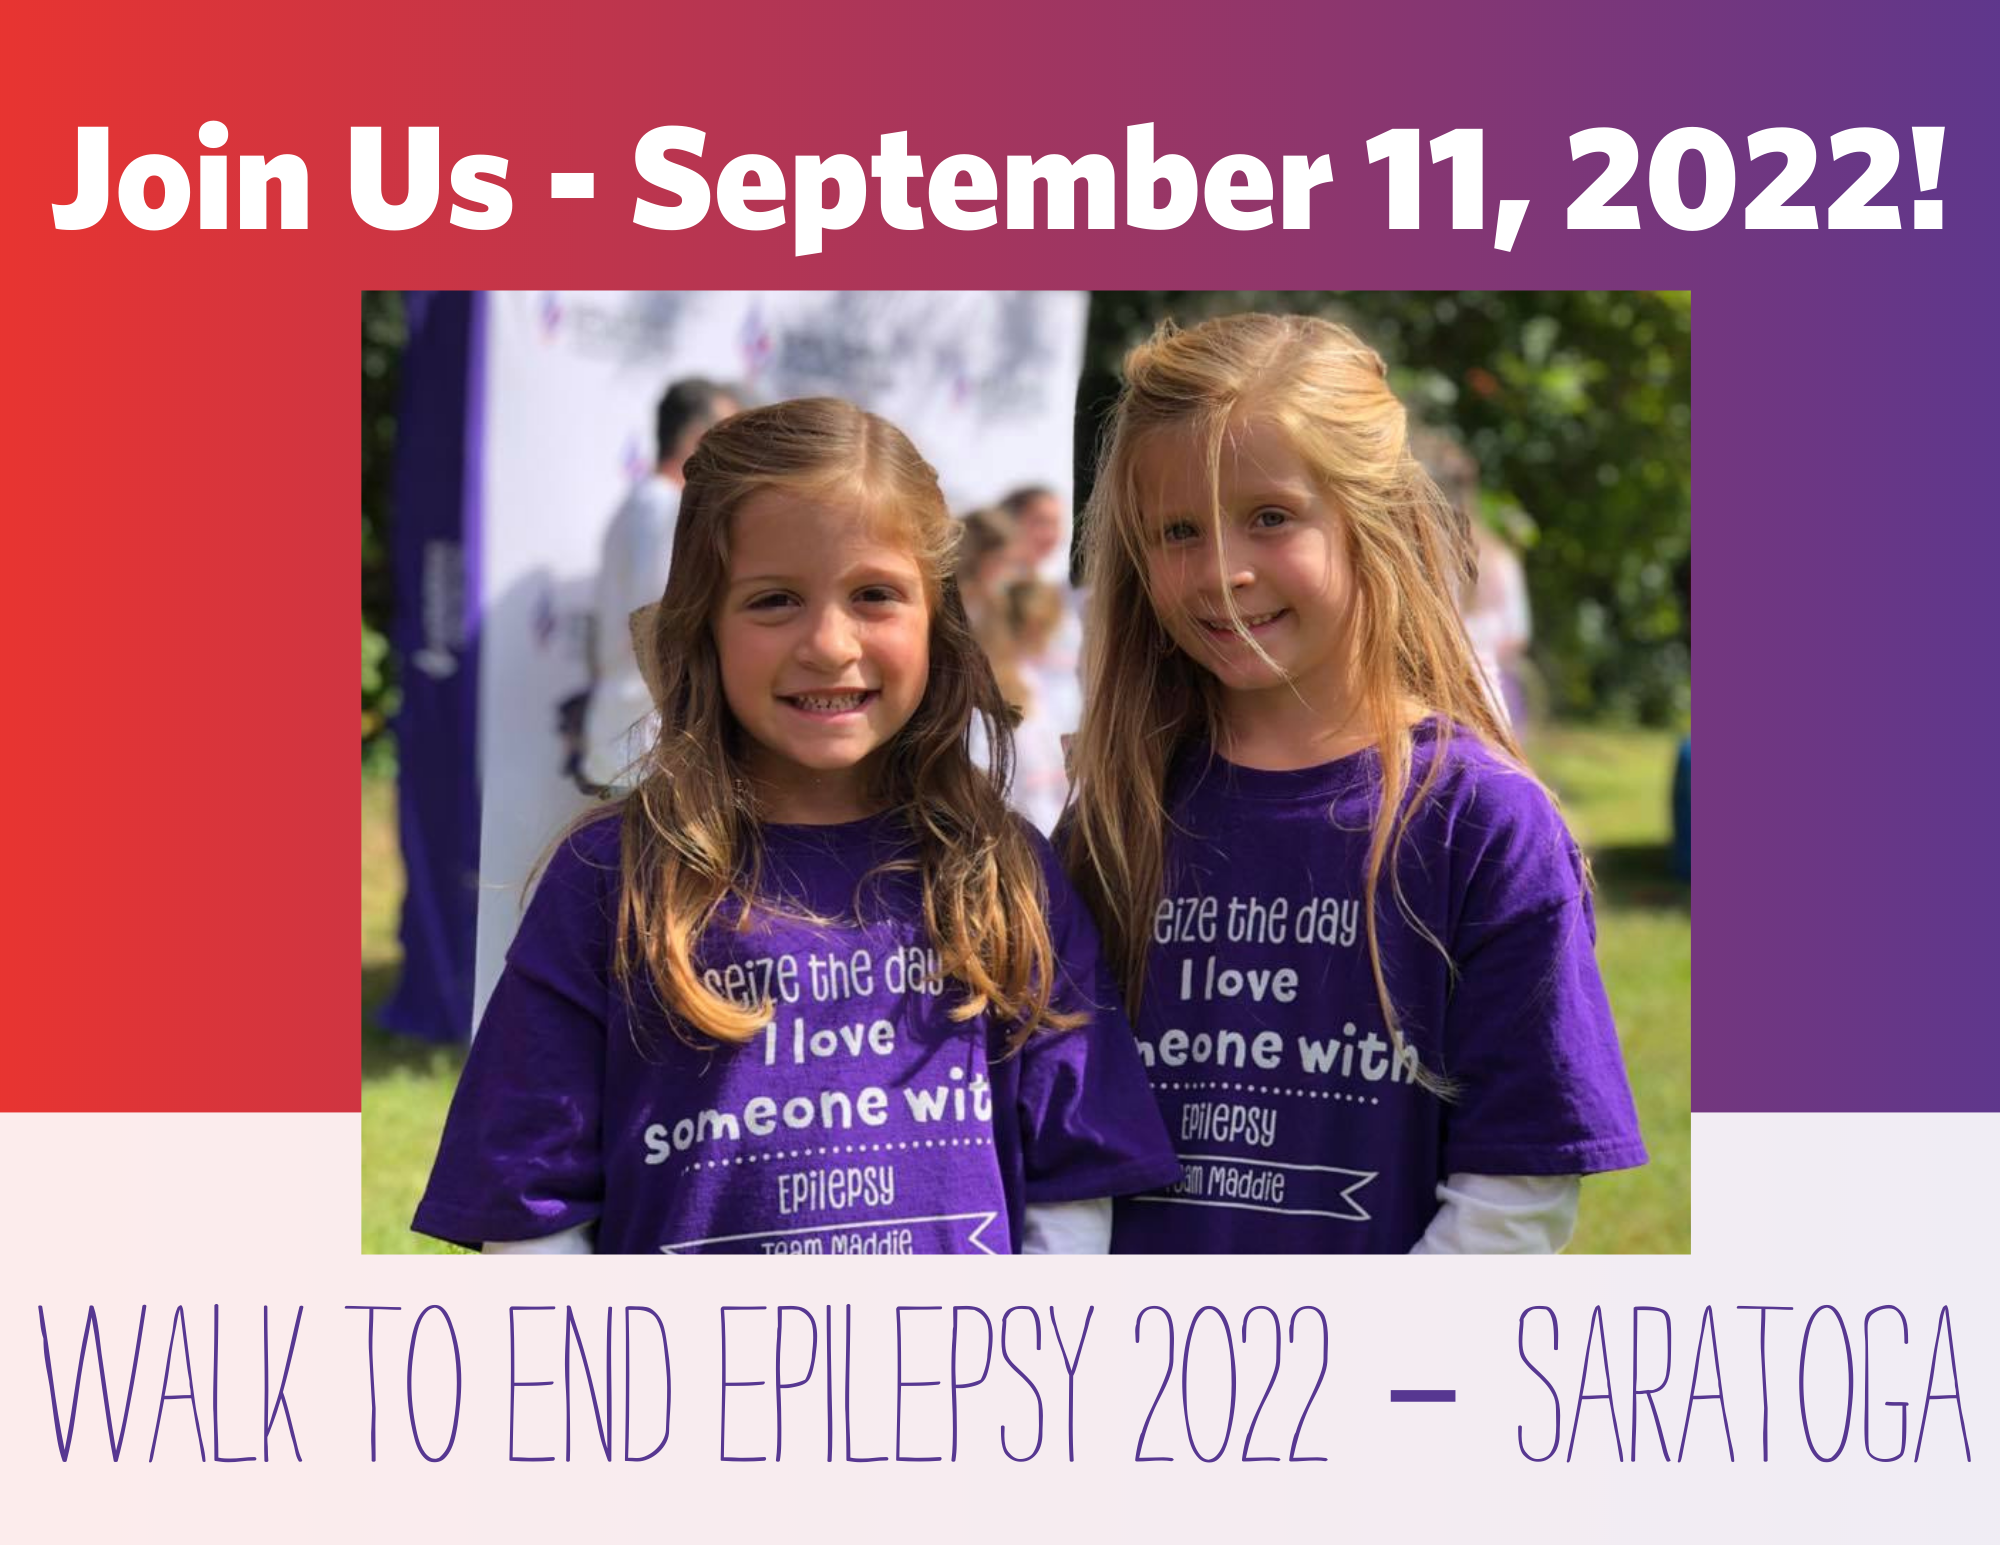 Flyer for Saratoga walk to end epilepsy 2022